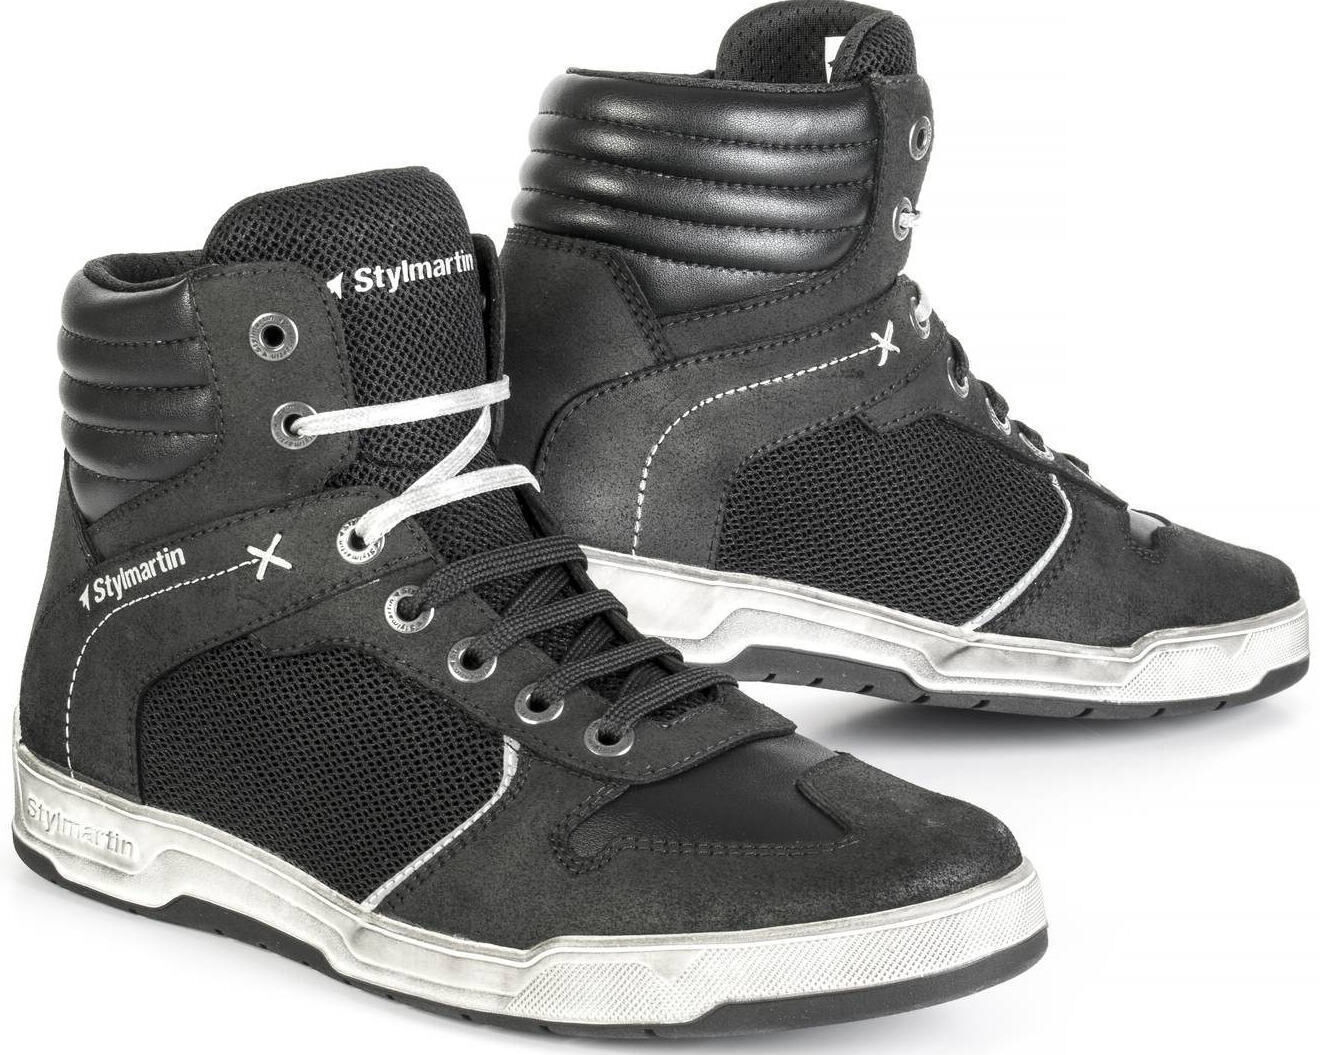 Stylmartin Atom Zapatos de moto - Negro Blanco (39)